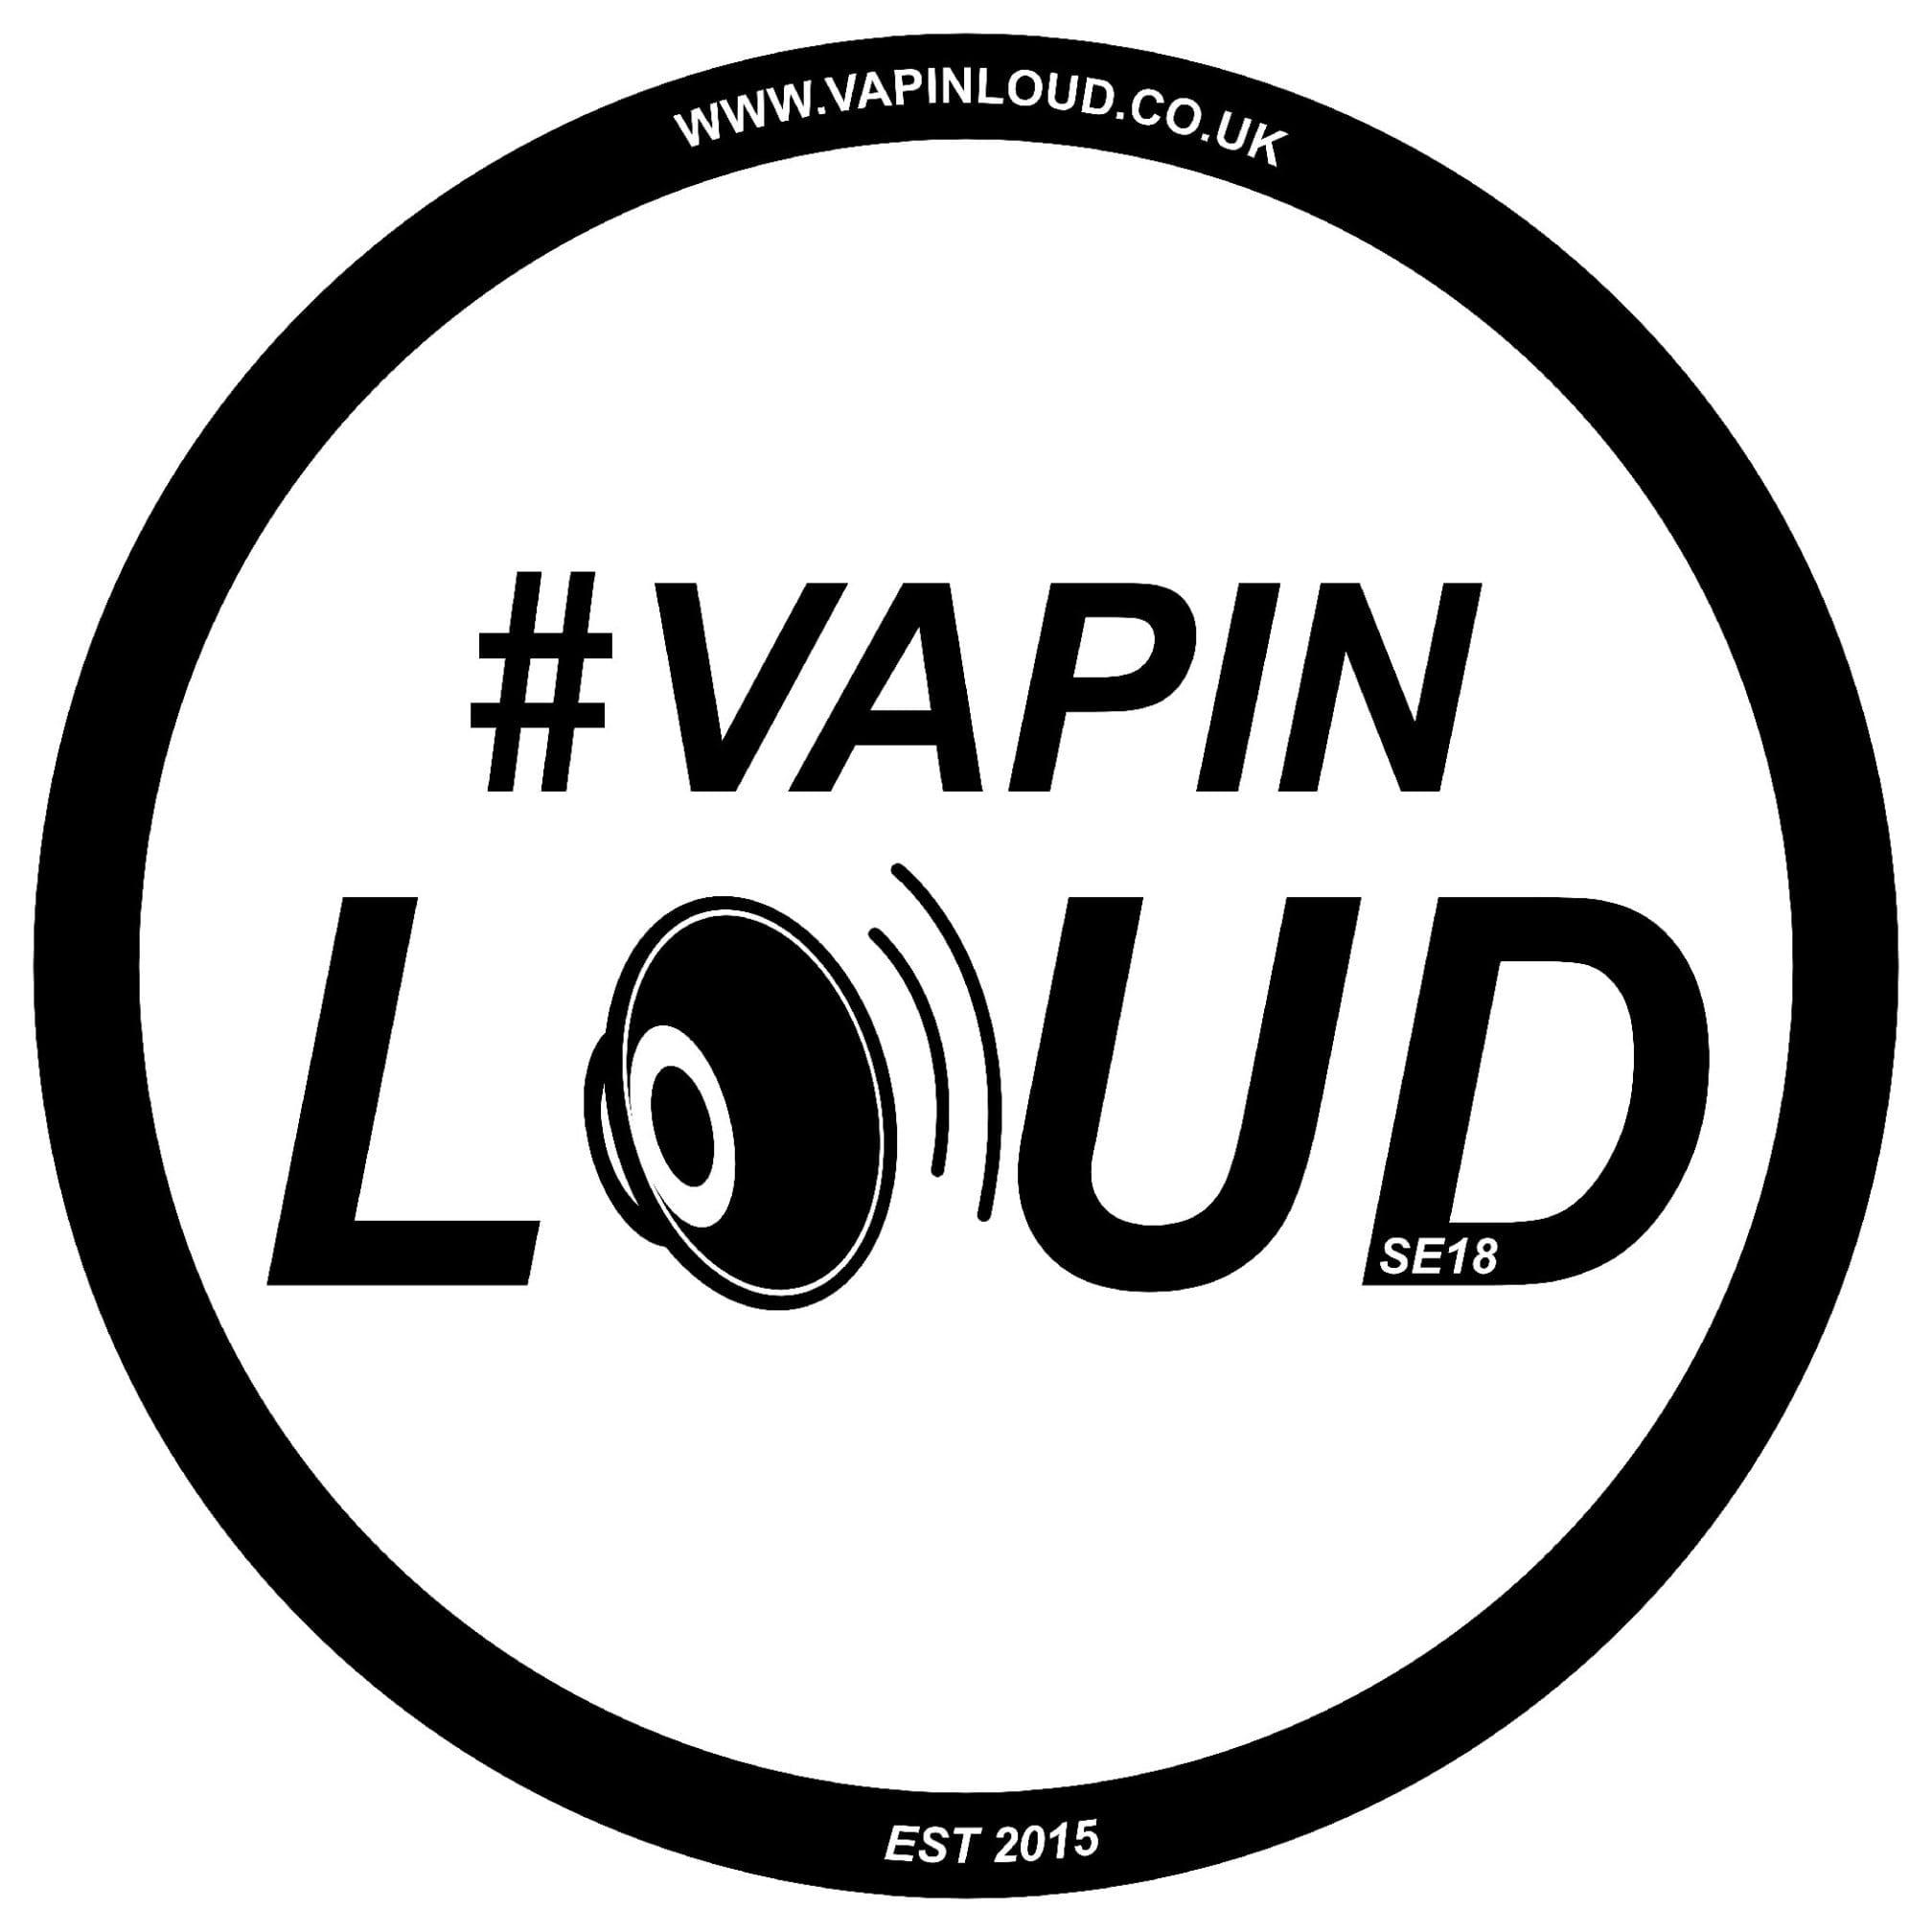 Images Vapin Loud Ltd